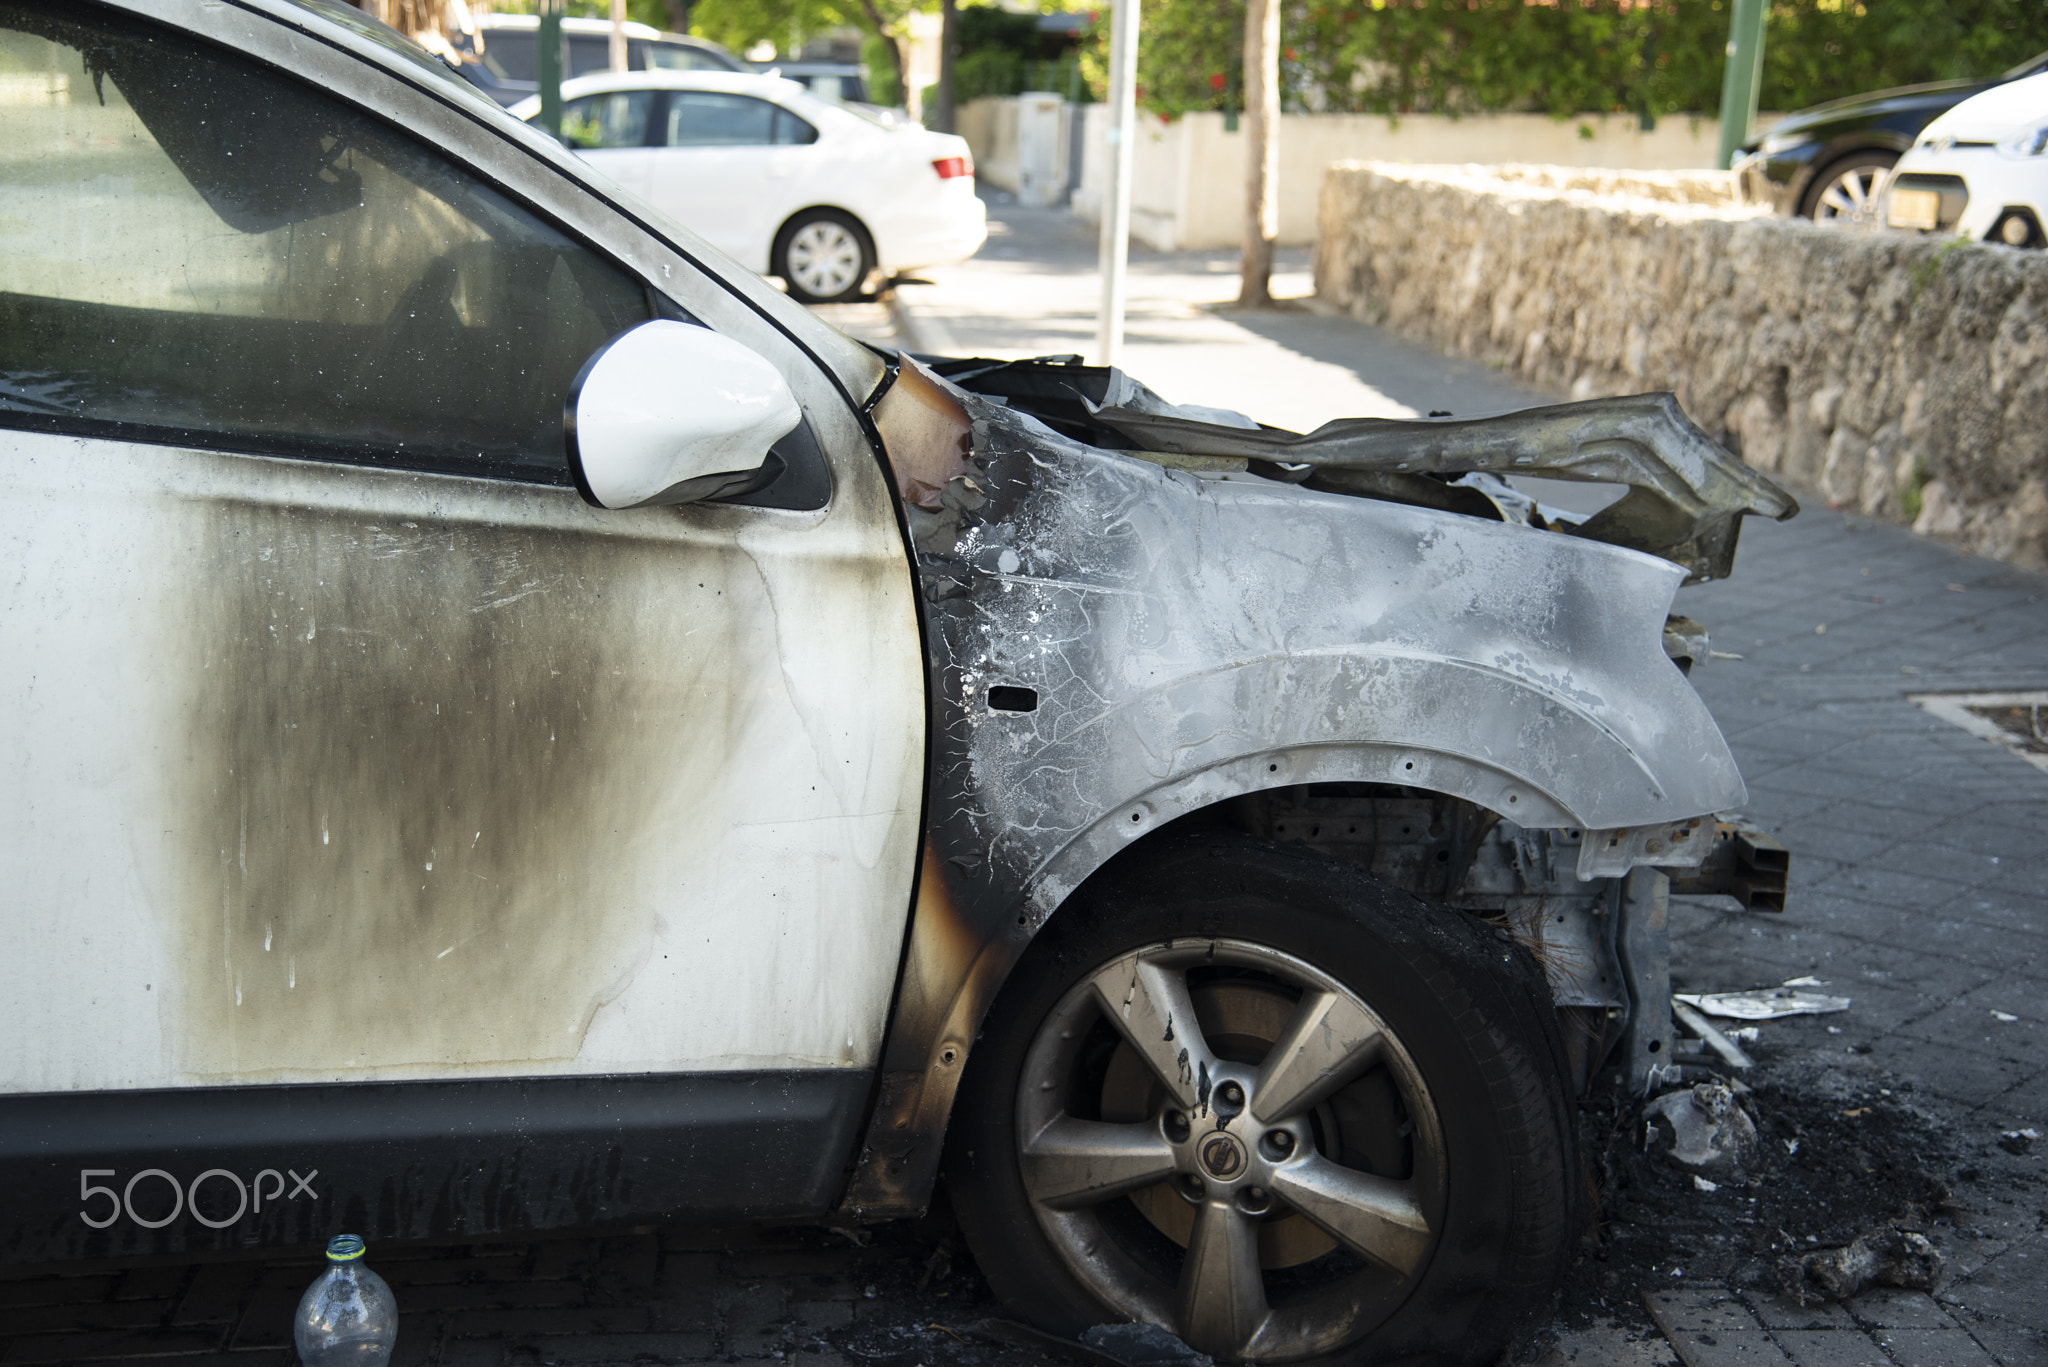 ISRAEL, Tel Aviv - 15 May 2021: Vandalism or revenge, burnt car. The